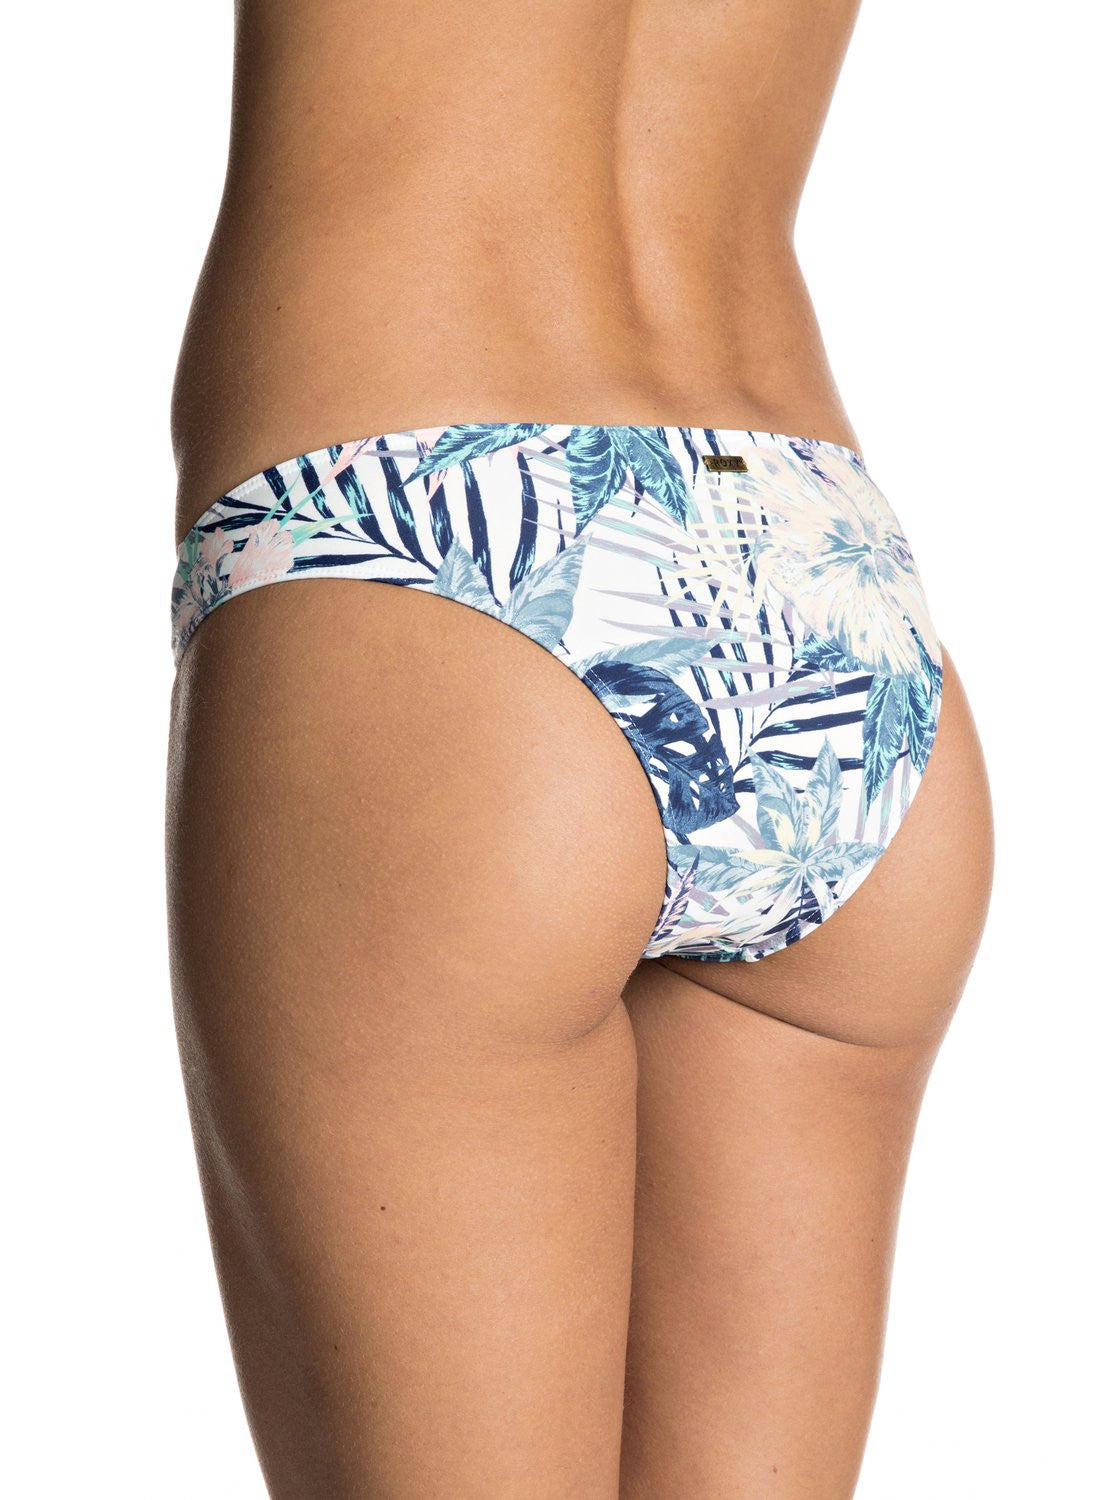 Sea Lovers Surfer Bikini Bottoms - Marshmallow Beyond Love womens swimwear